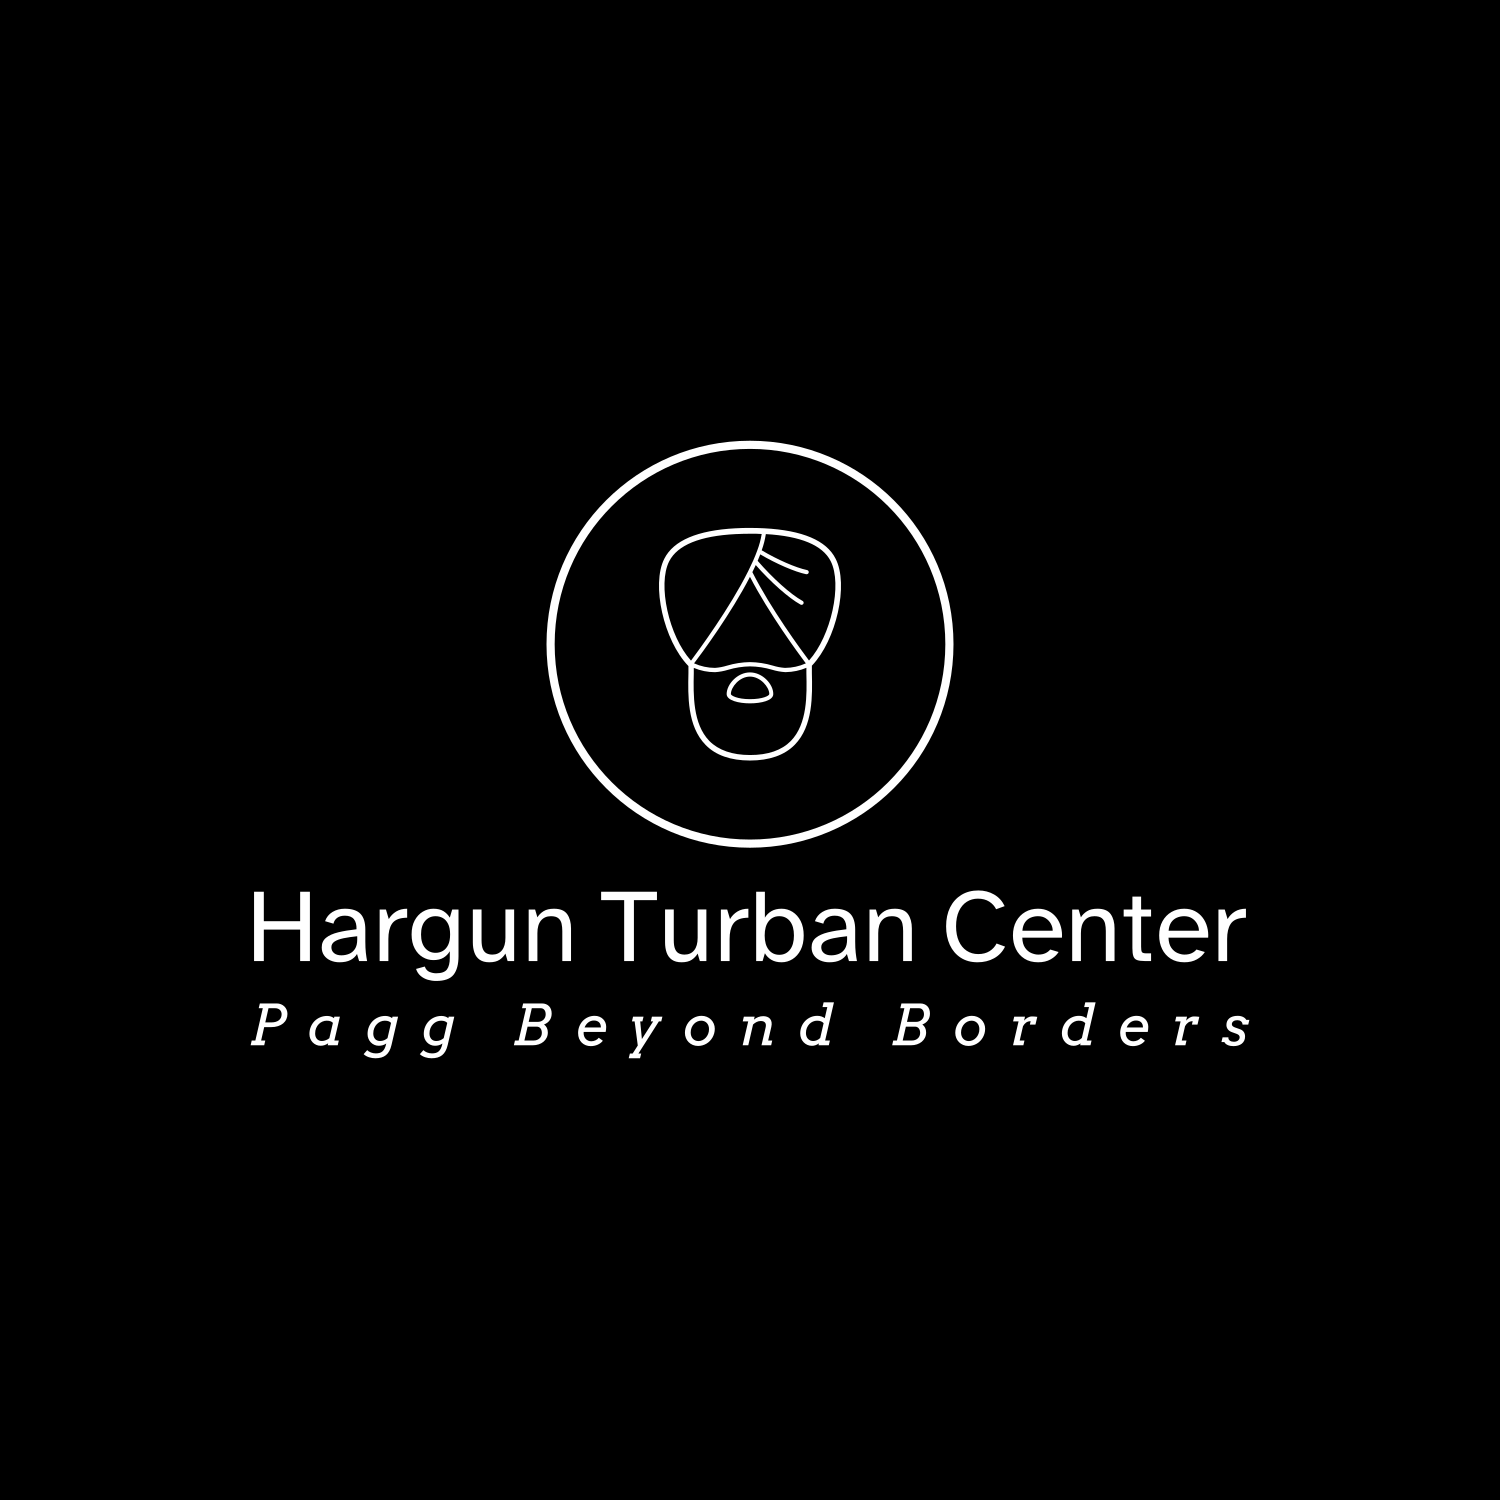 Hargun Turban Center logo